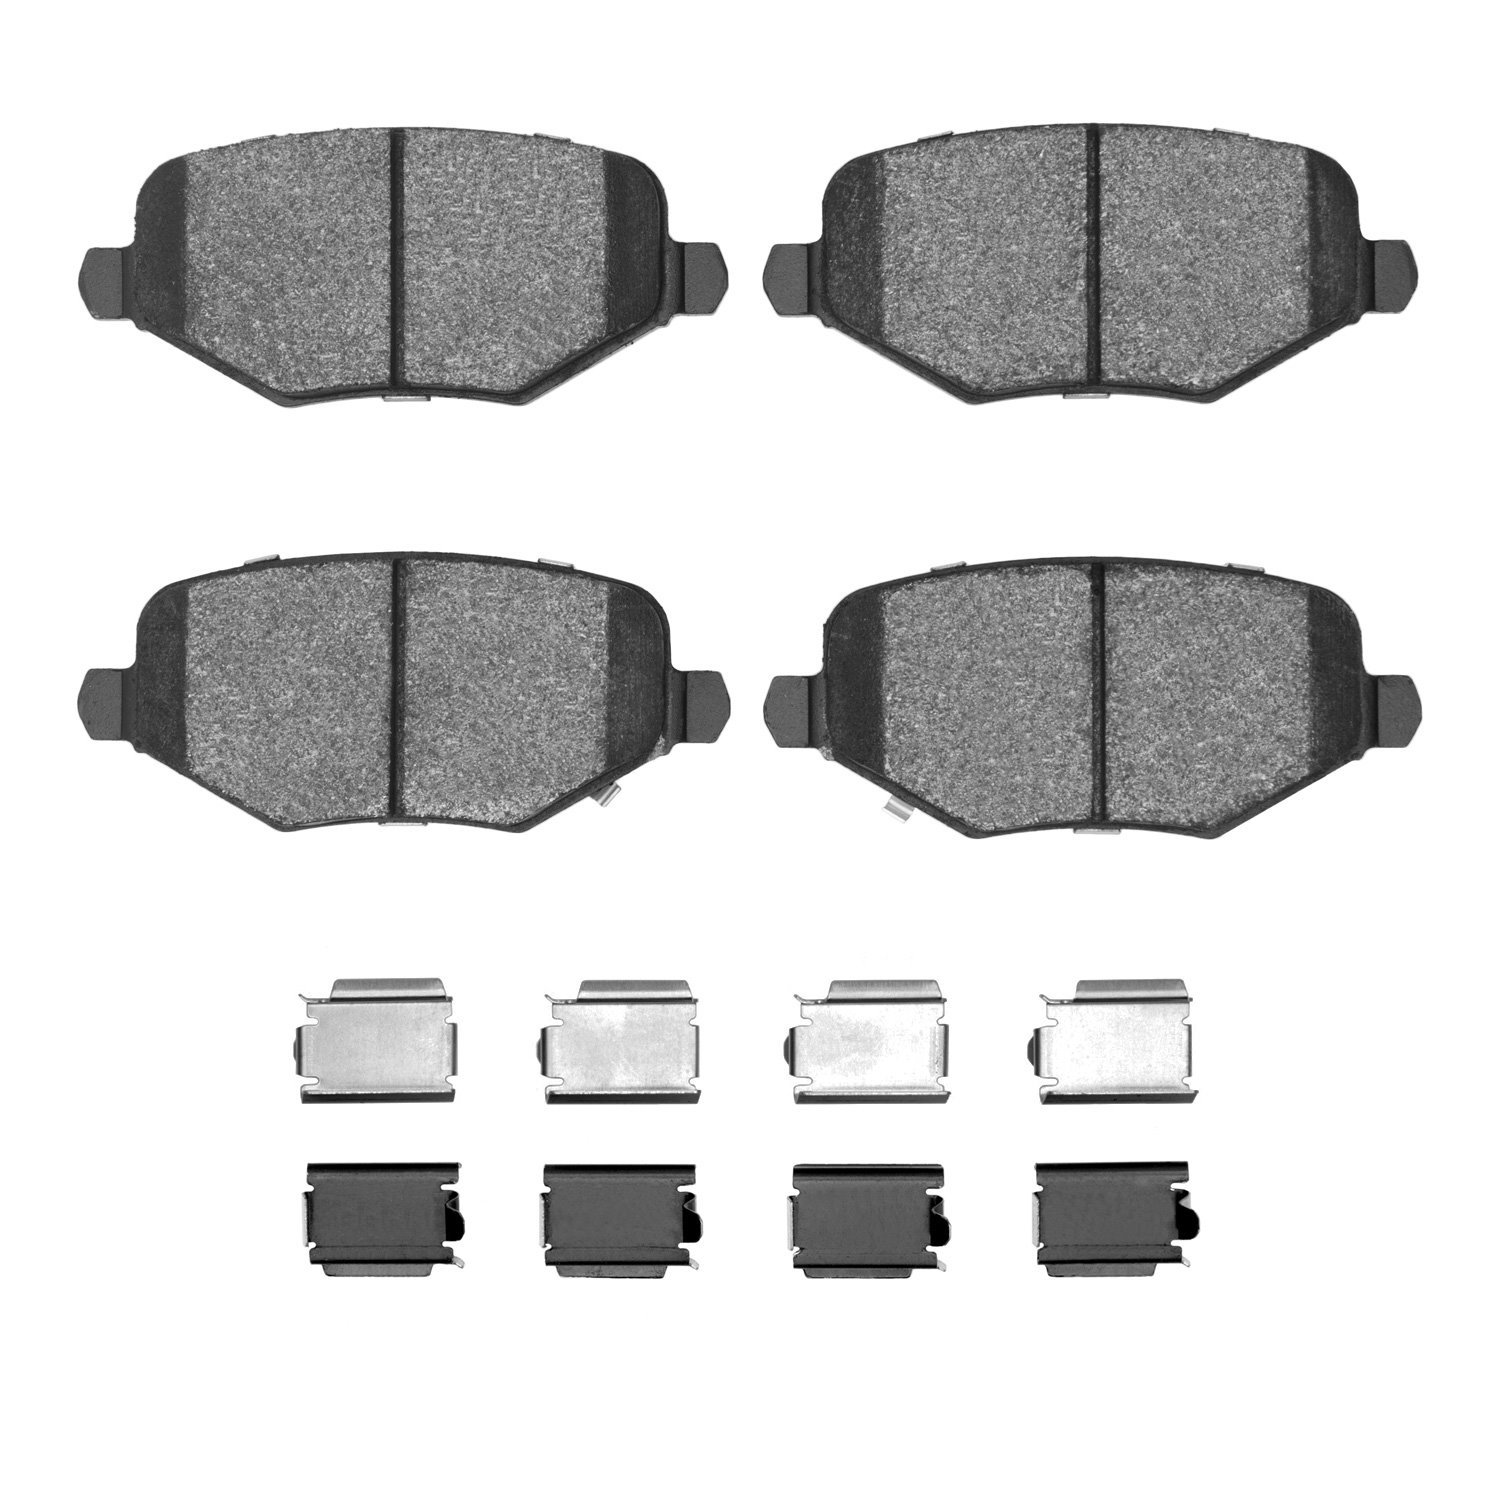 1551-1719-02 5000 Advanced Ceramic Brake Pads & Hardware Kit, 2009-2014 Multiple Makes/Models, Position: Rear